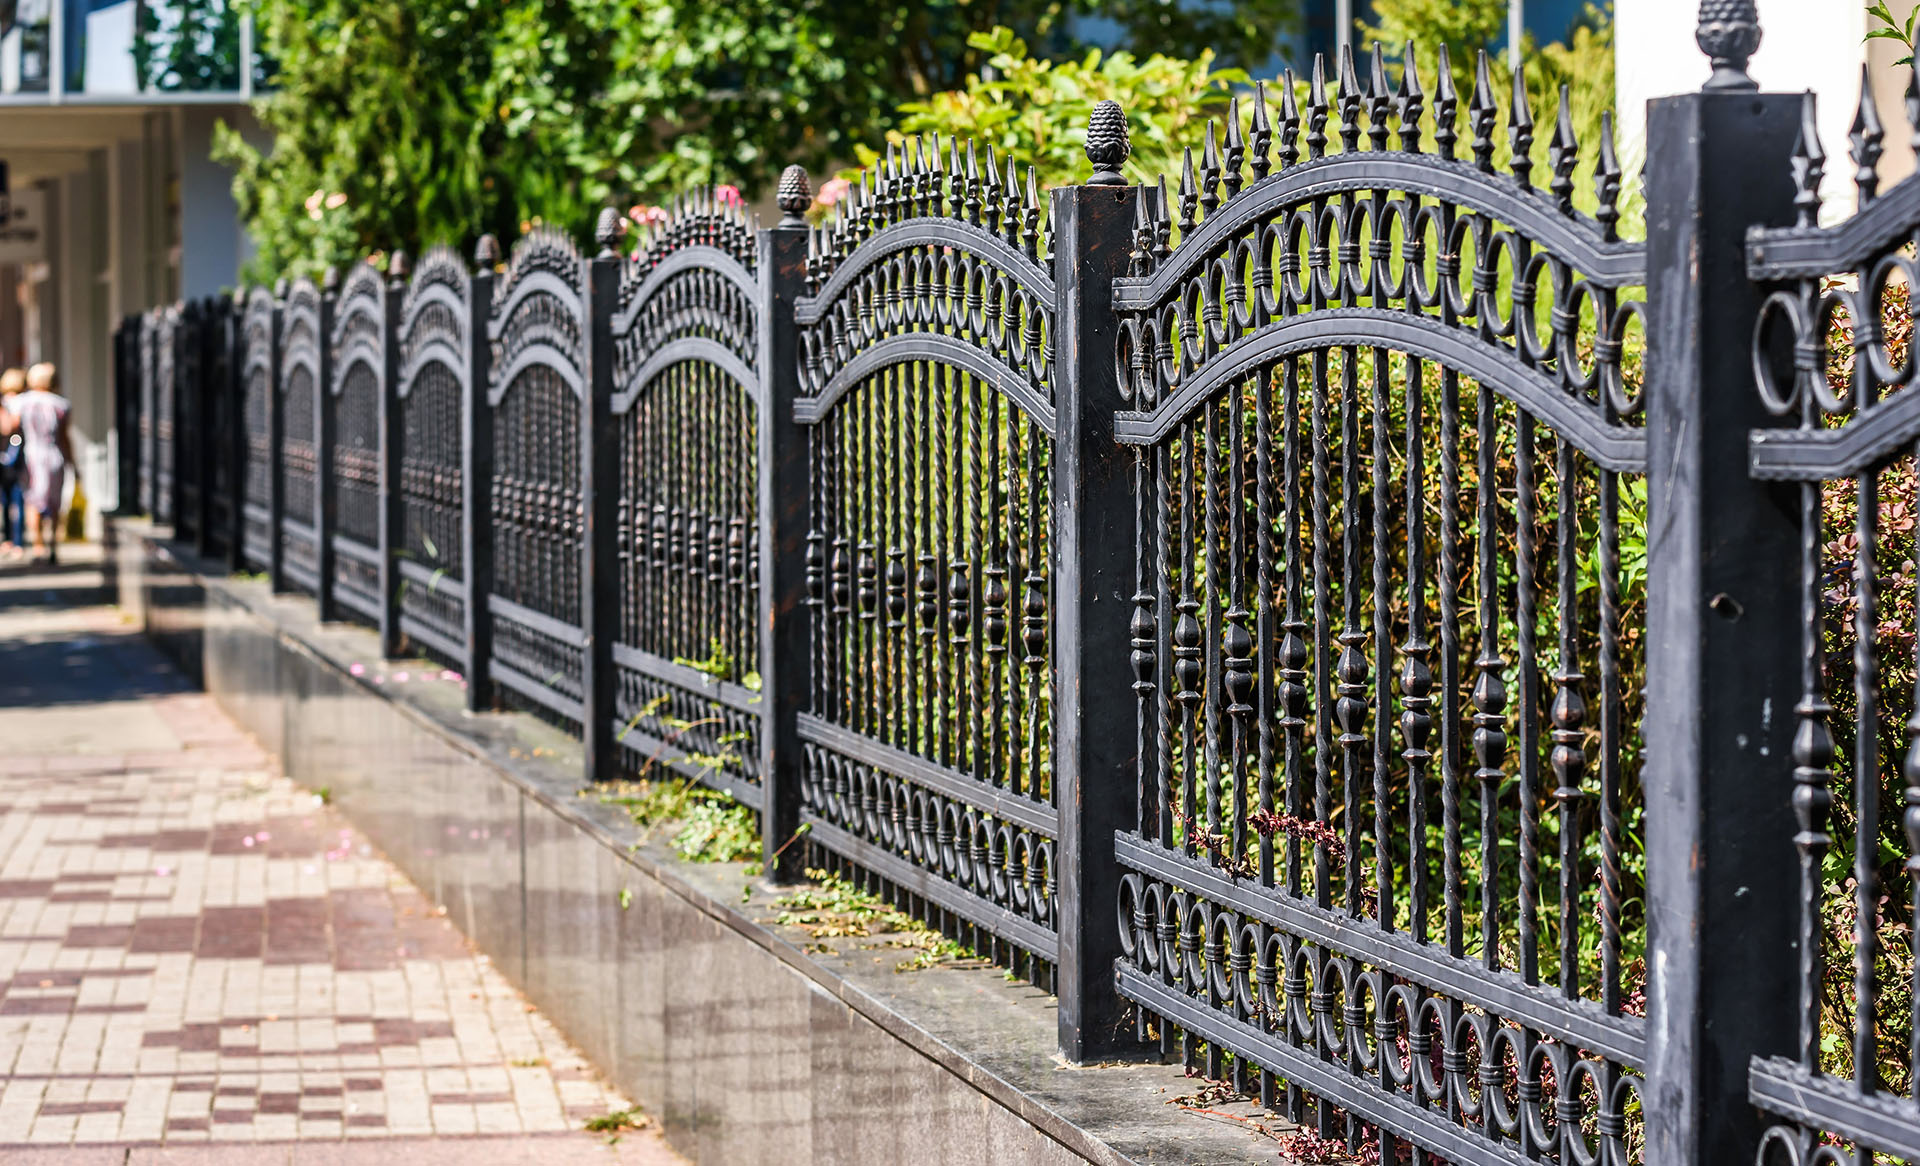 Fences Auckland